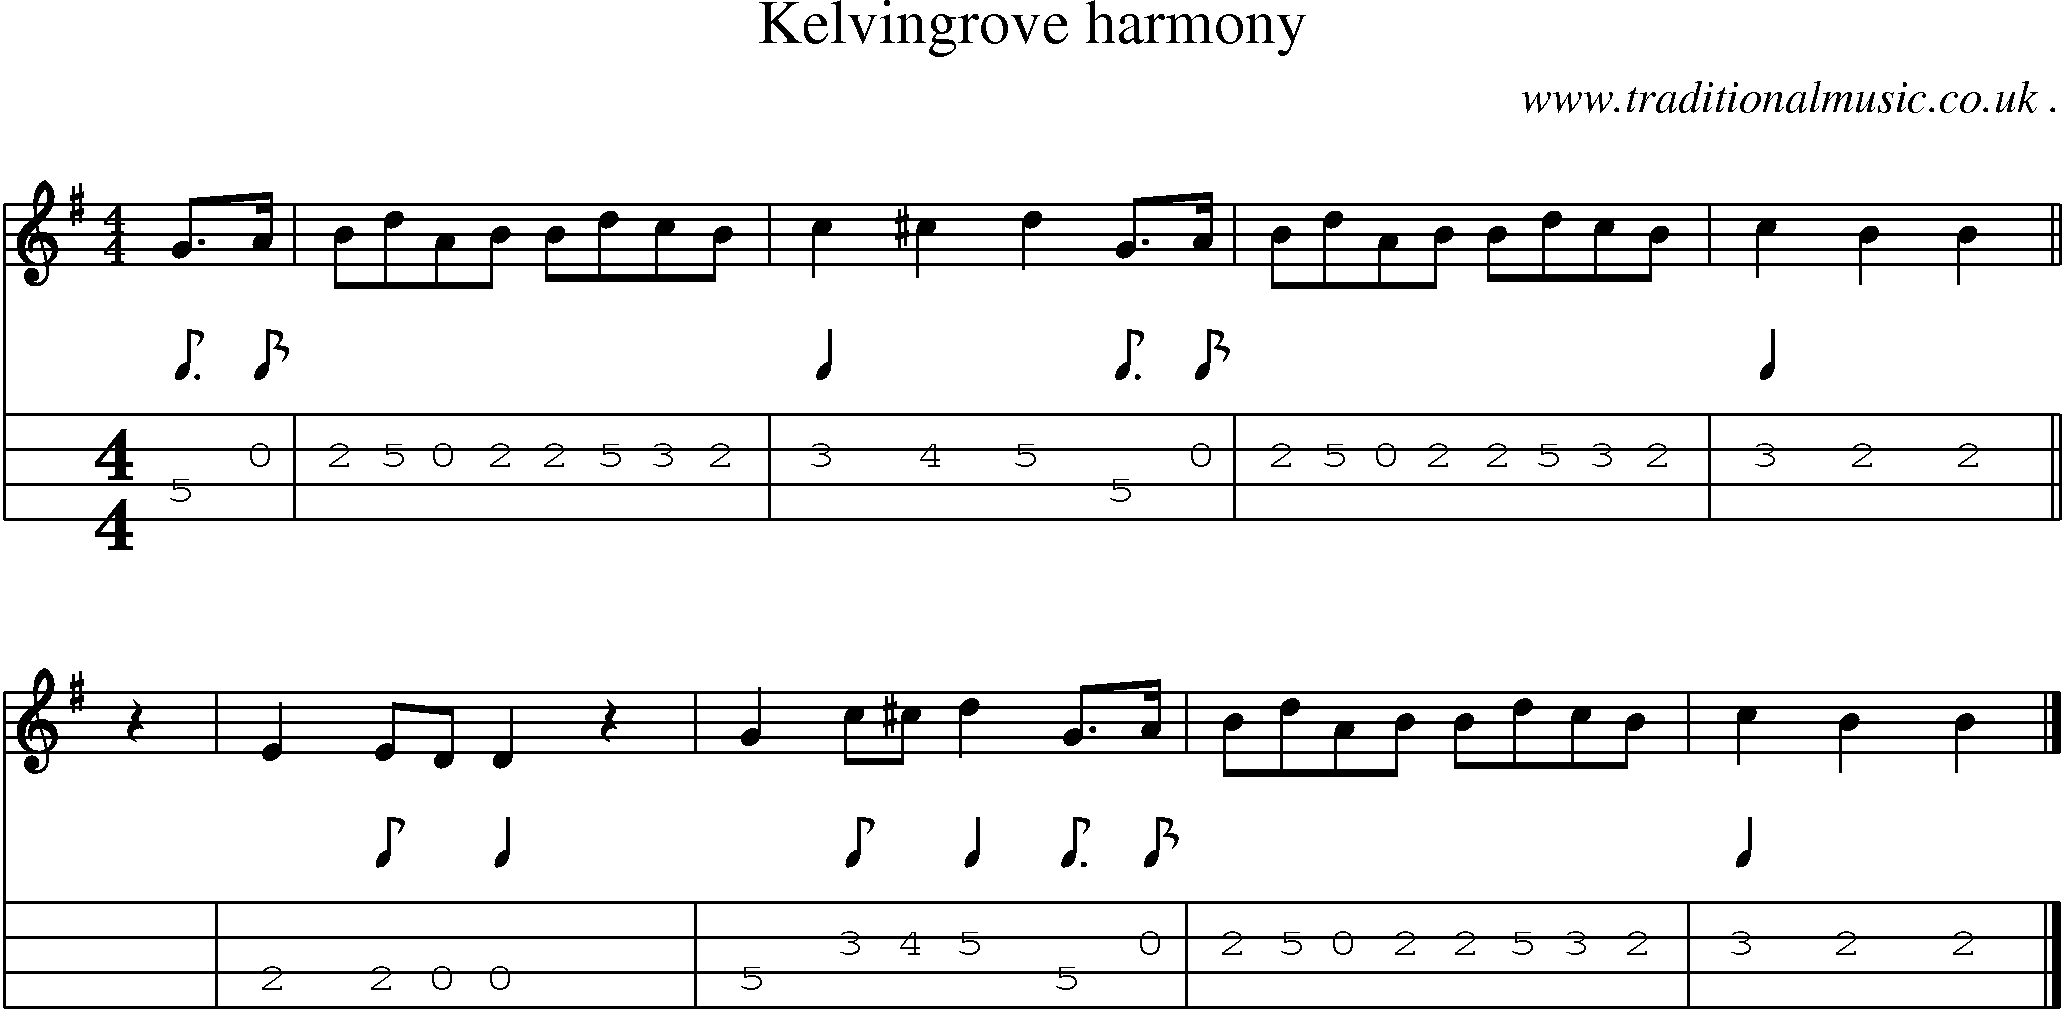 Sheet-music  score, Chords and Mandolin Tabs for Kelvingrove Harmony